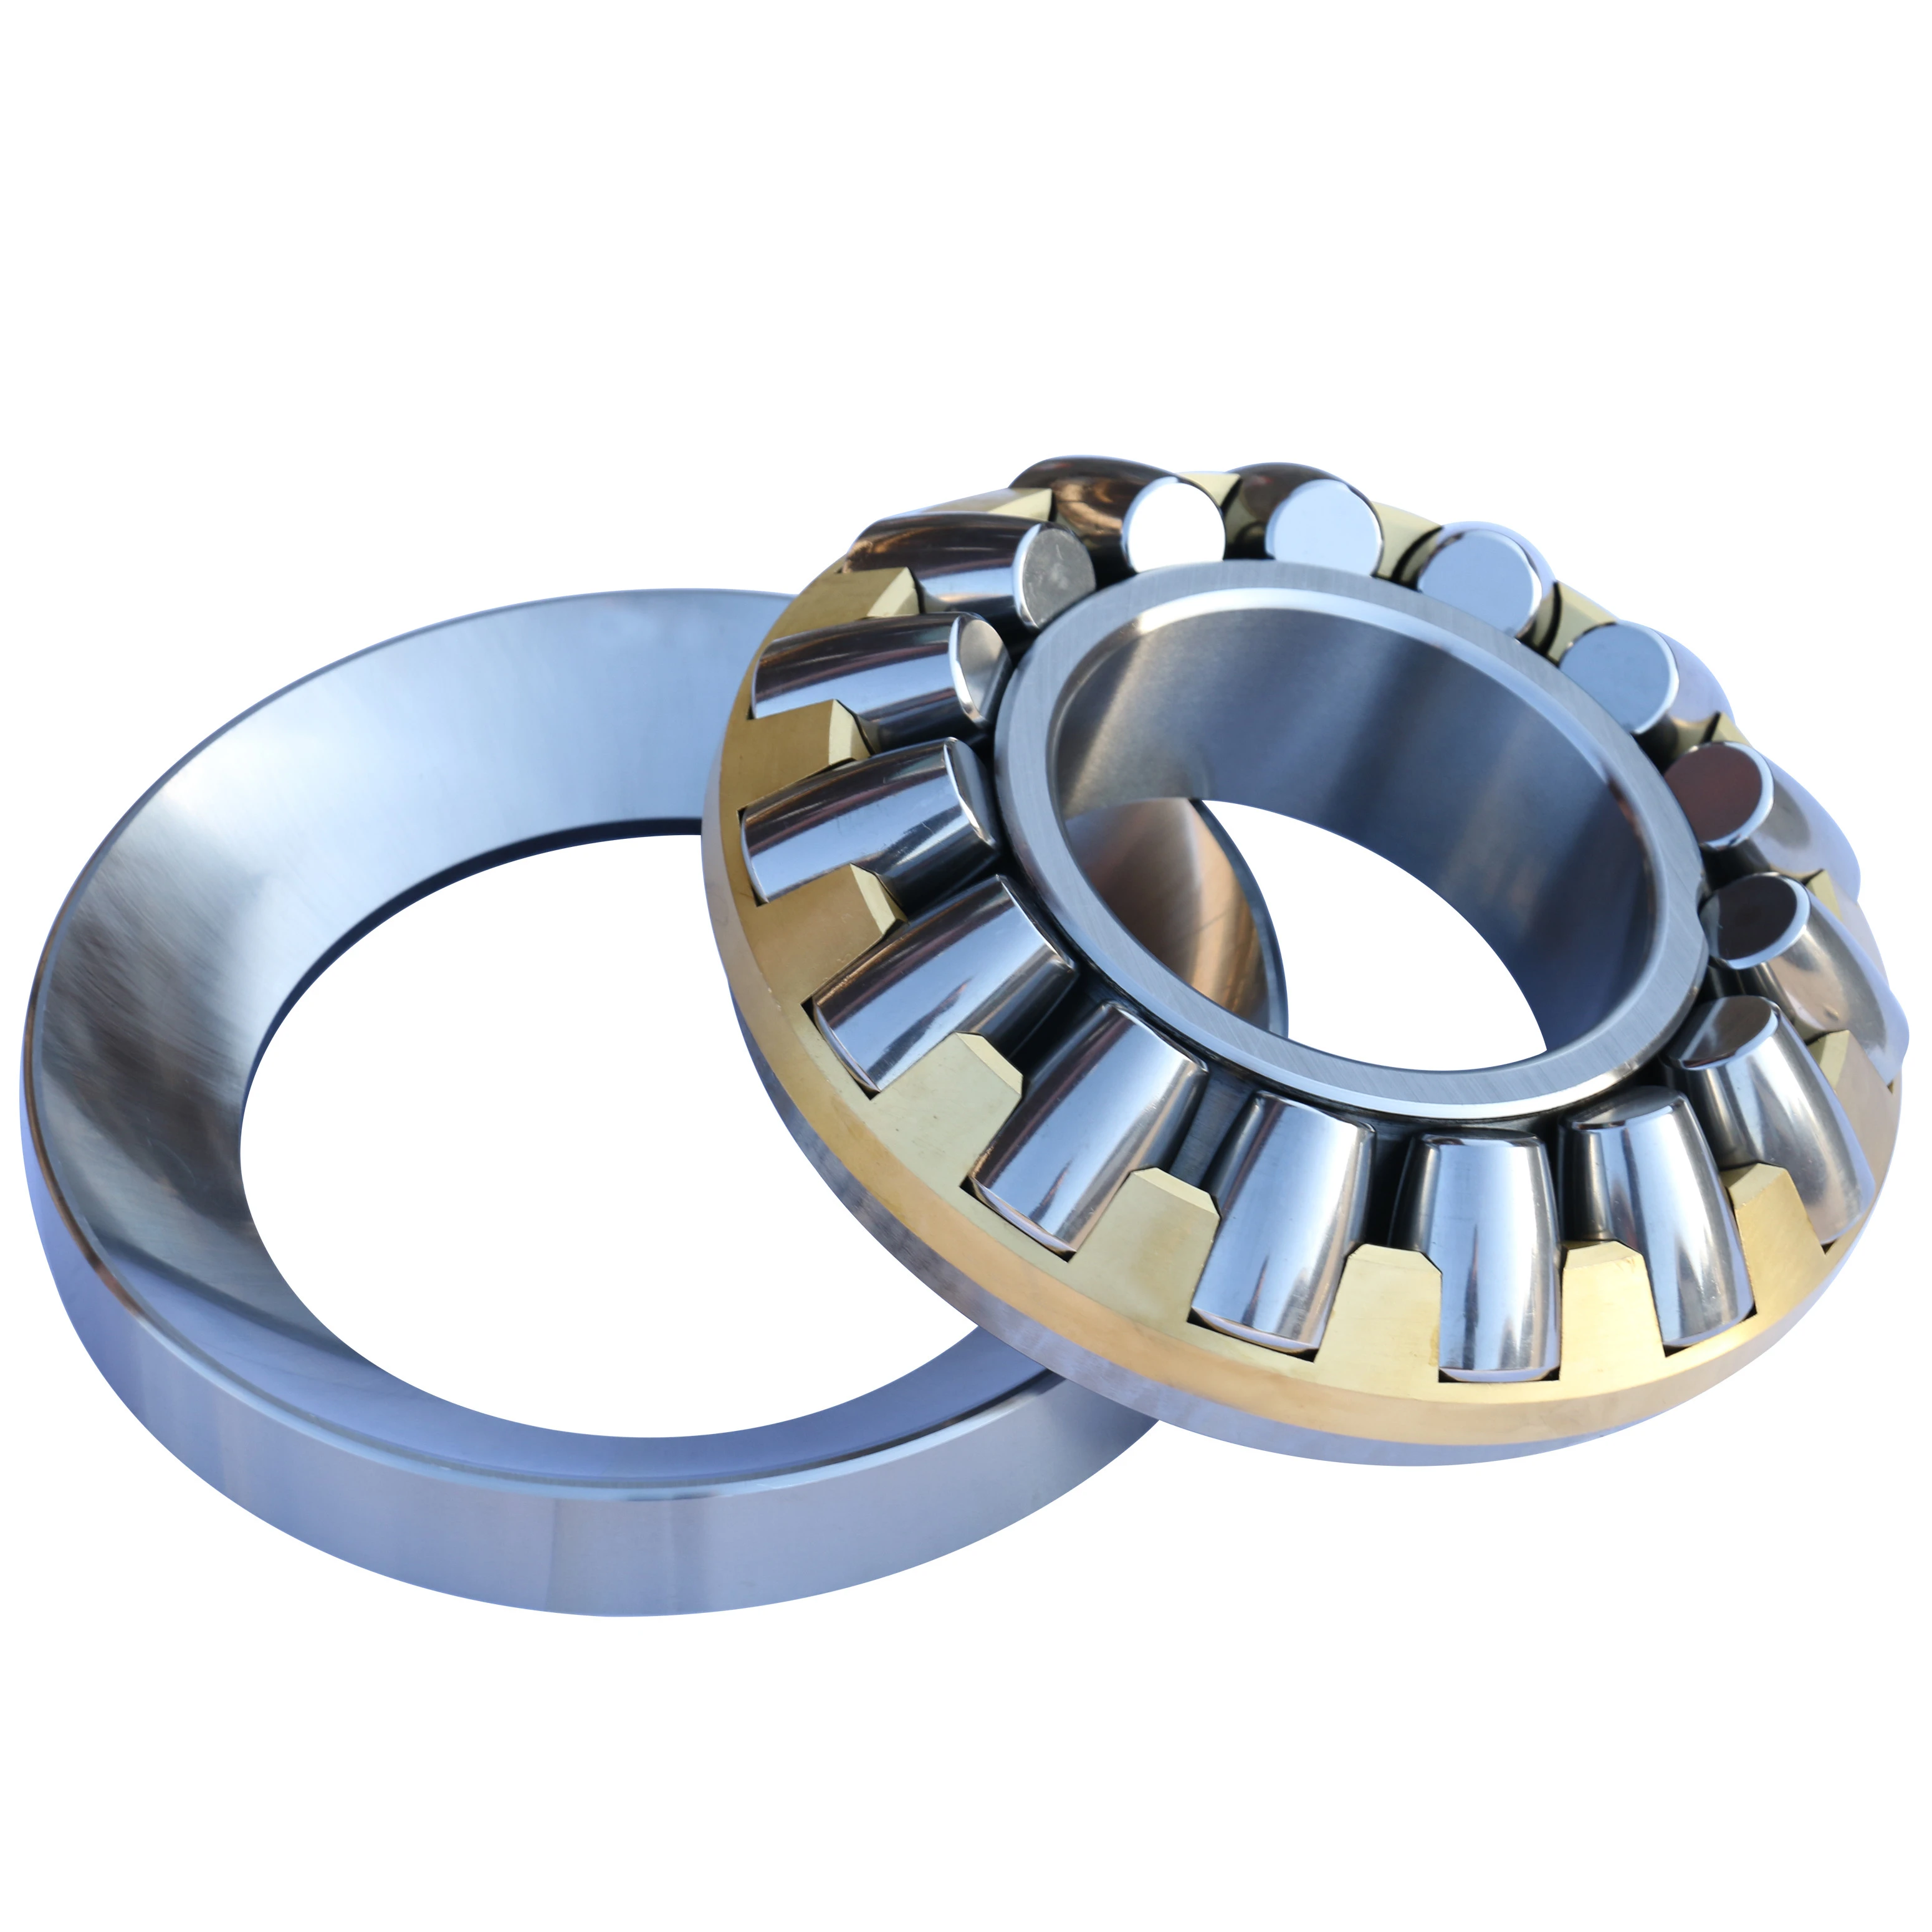 clunt original bearing thrust spherical roller bearing 29324 29326 29328 29330 29332 29334E for sale